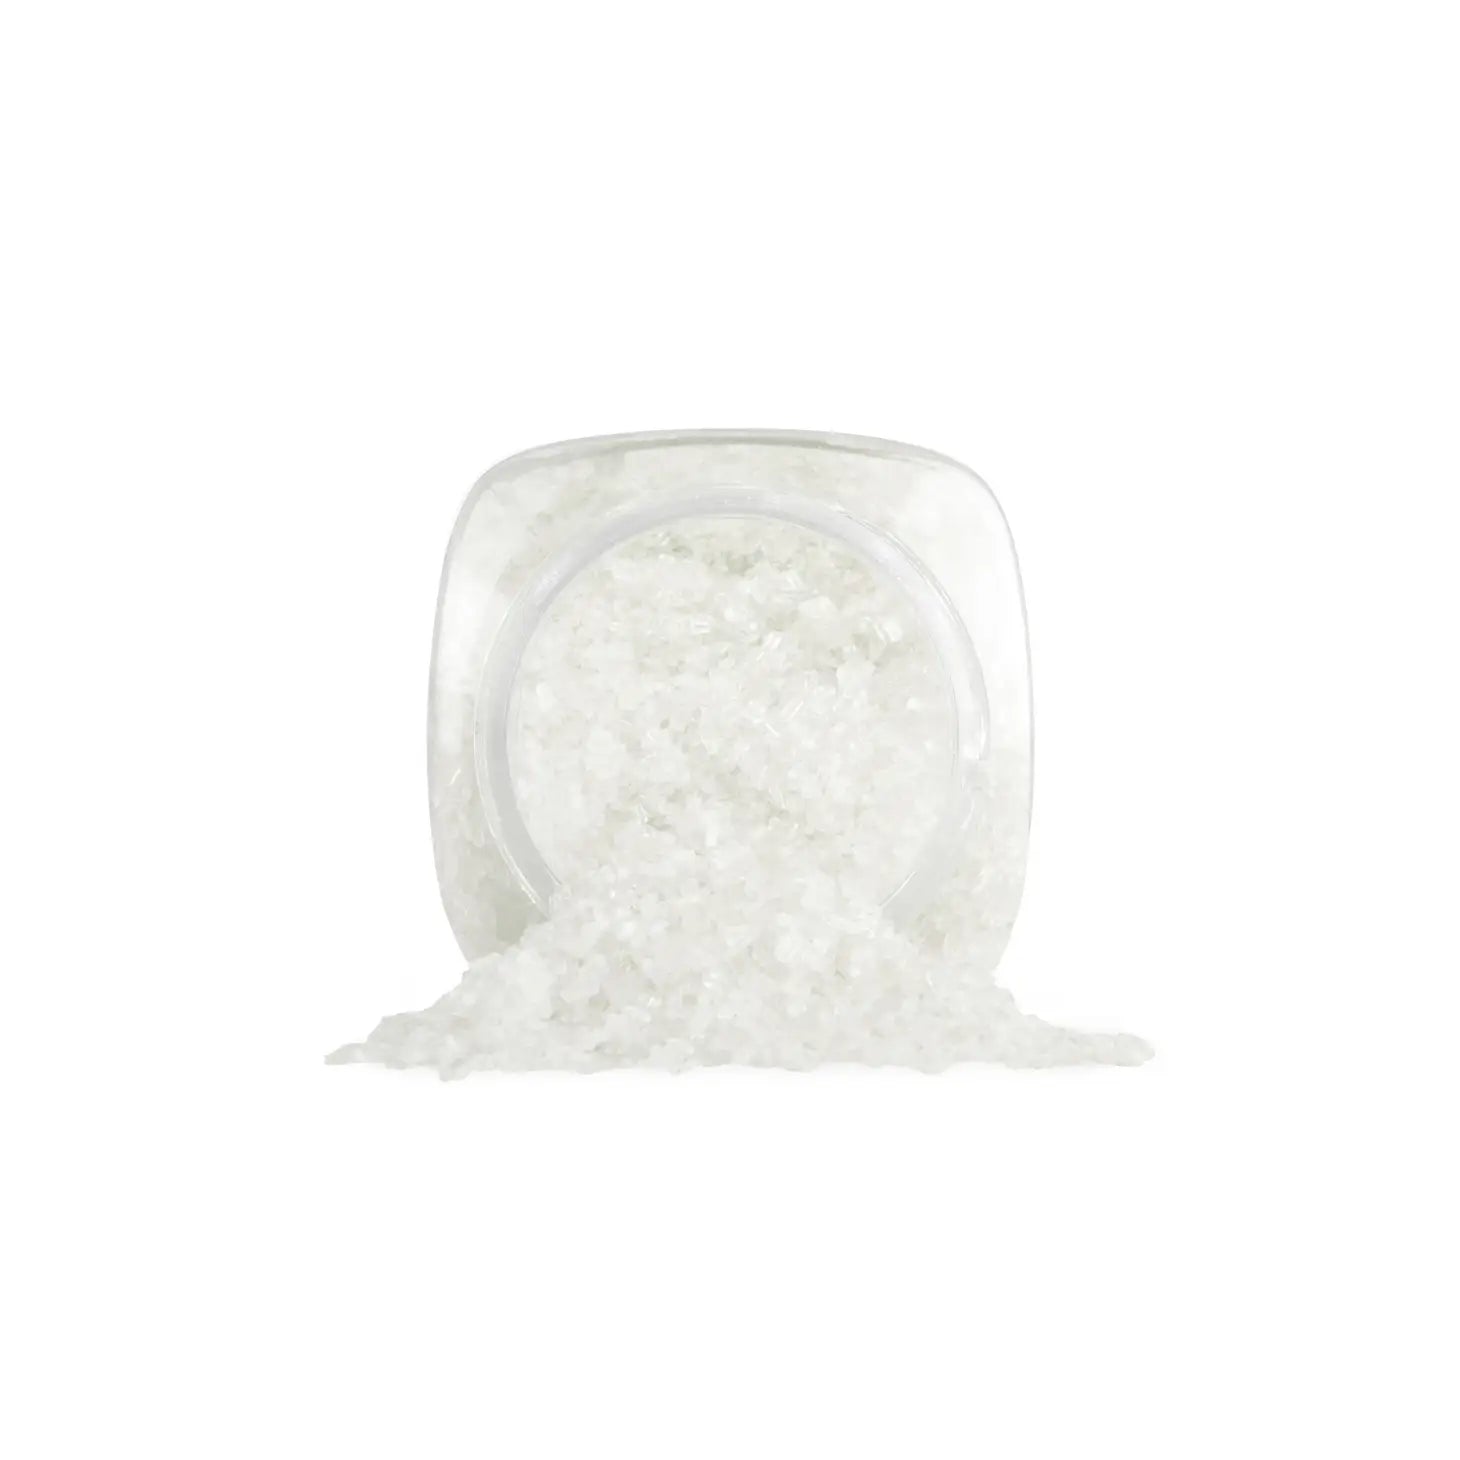 Coconut Salt Soak